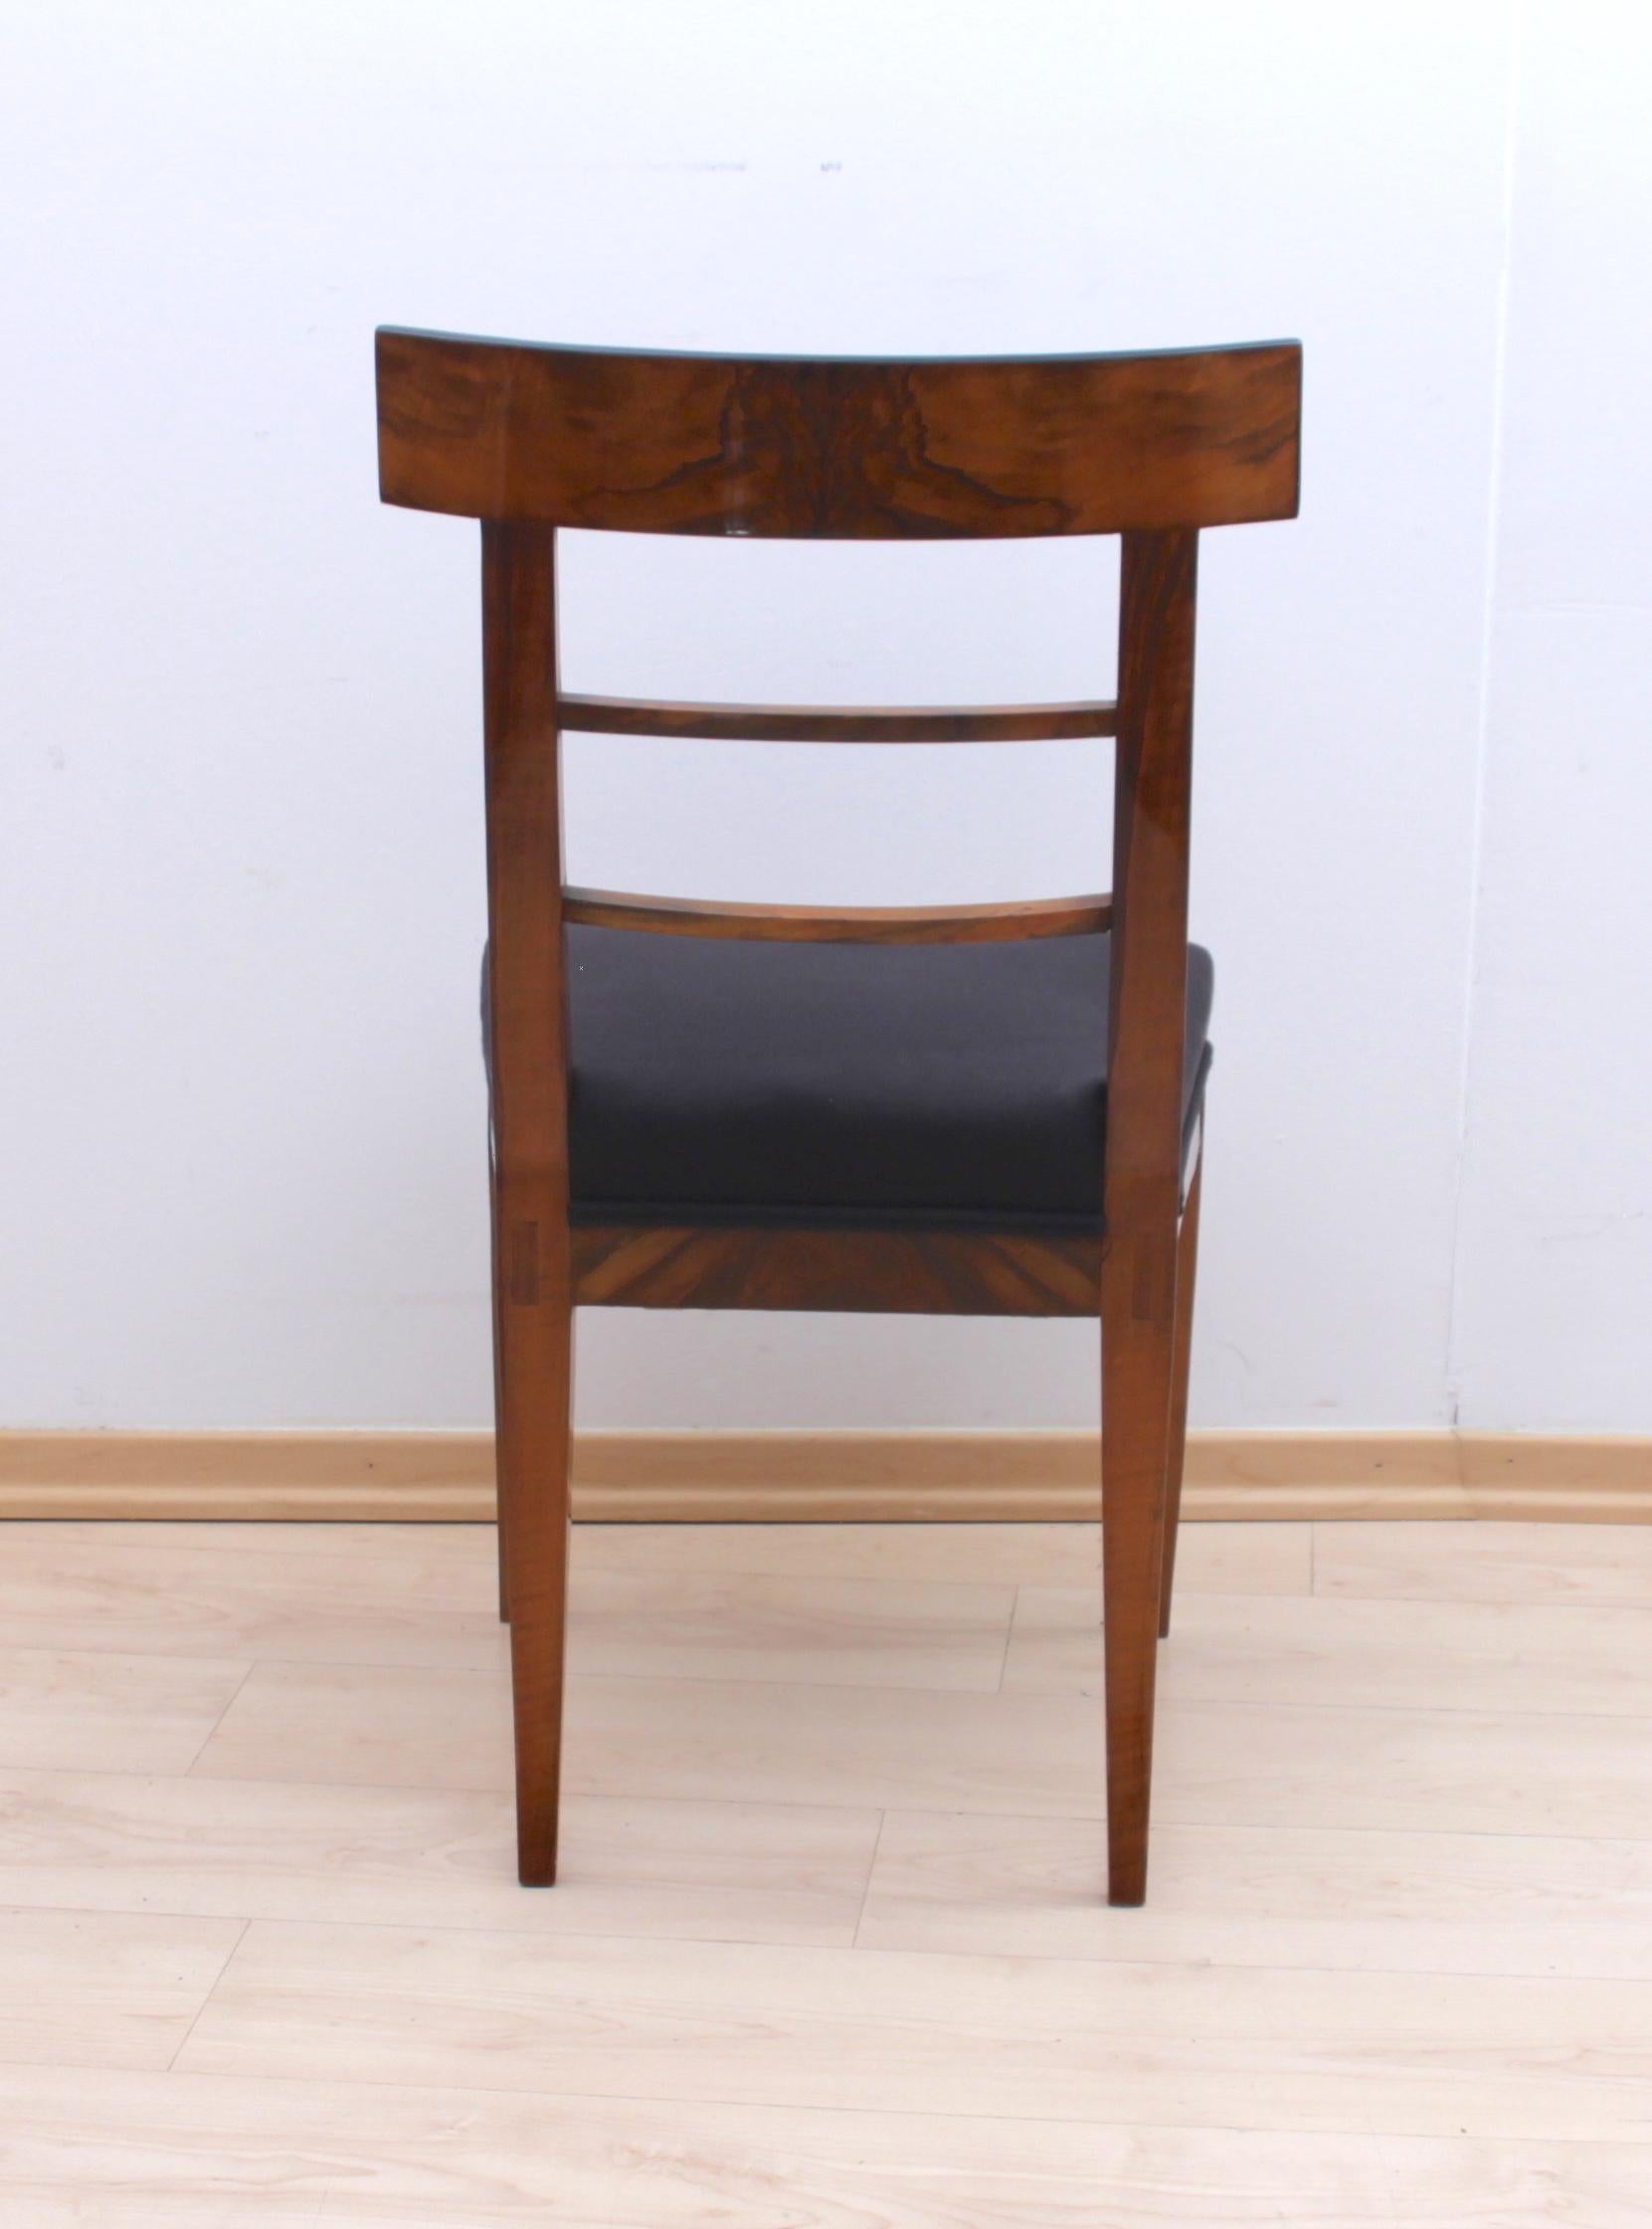 Polished Biedermeier Chair, Walnut Veneer, South Germany, circa 1820